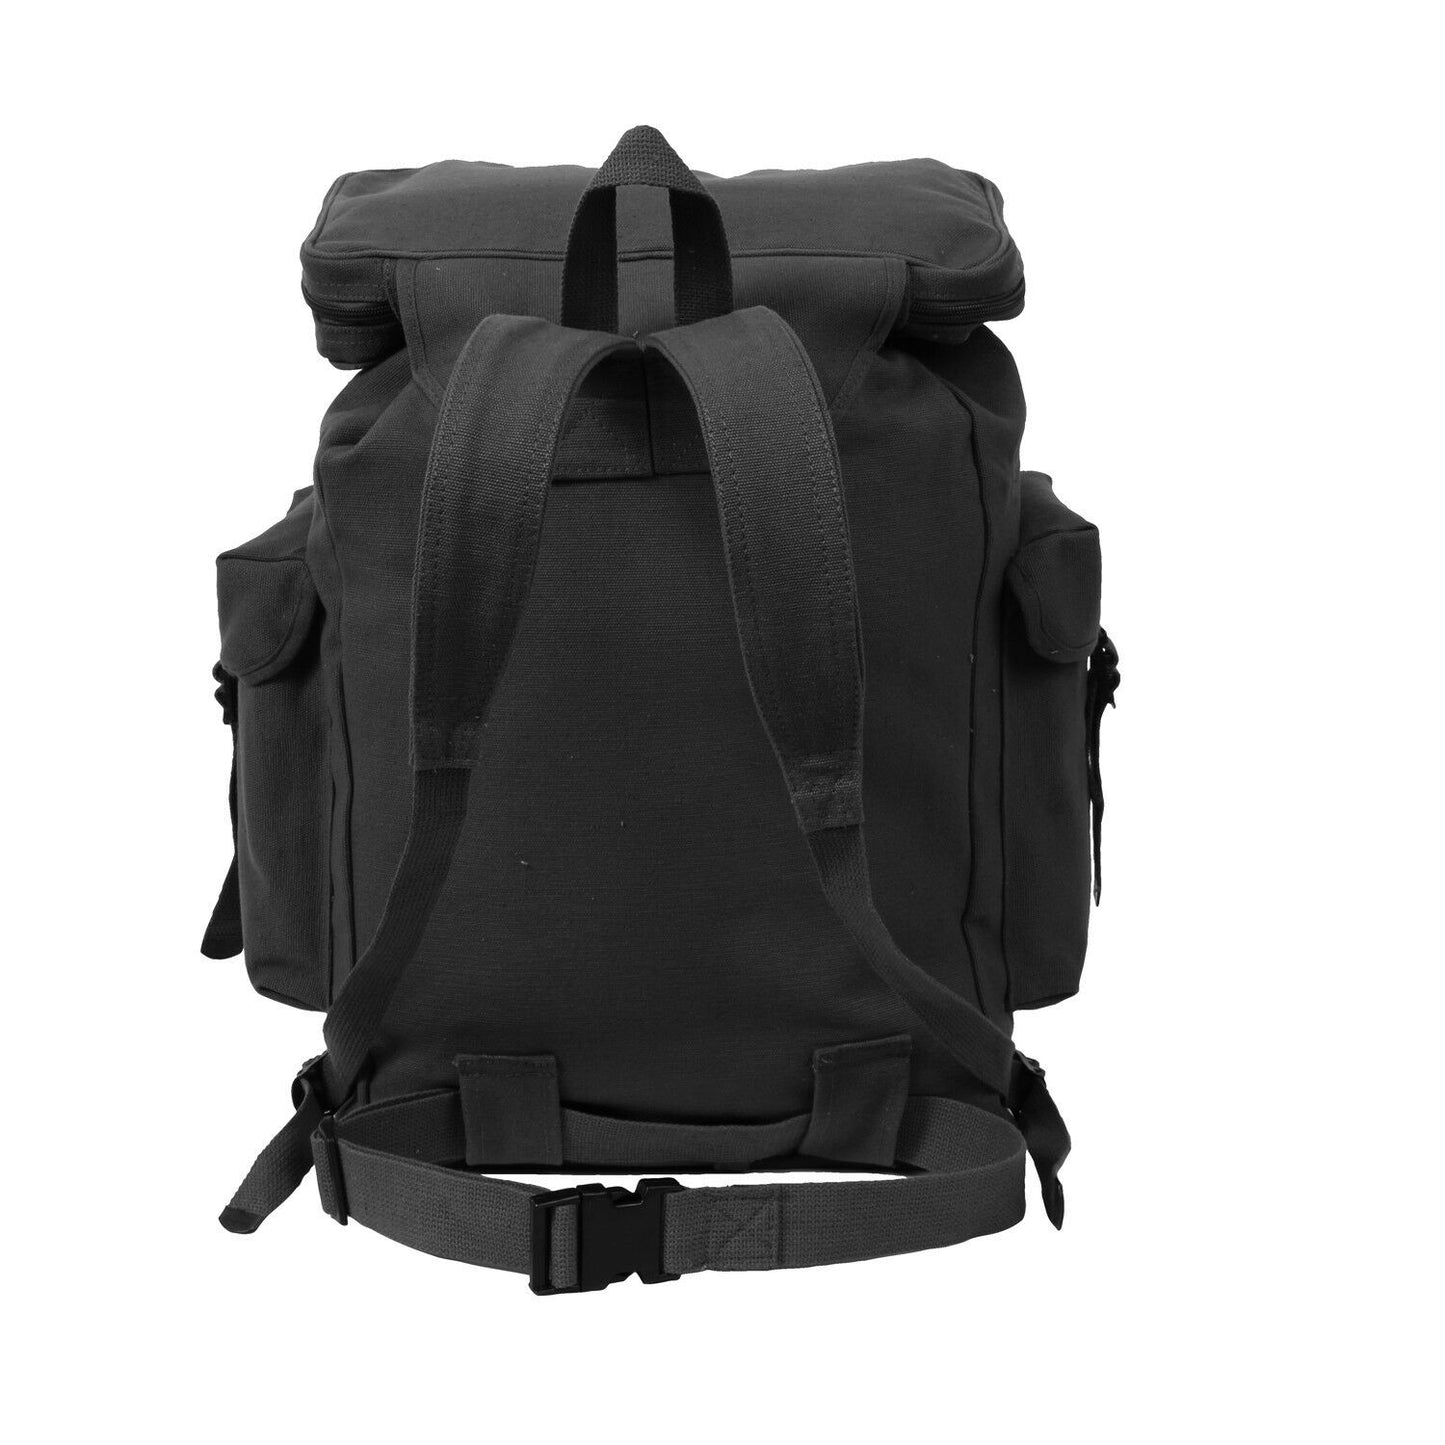 Rothco Canvas European Style Rucksack Backpack